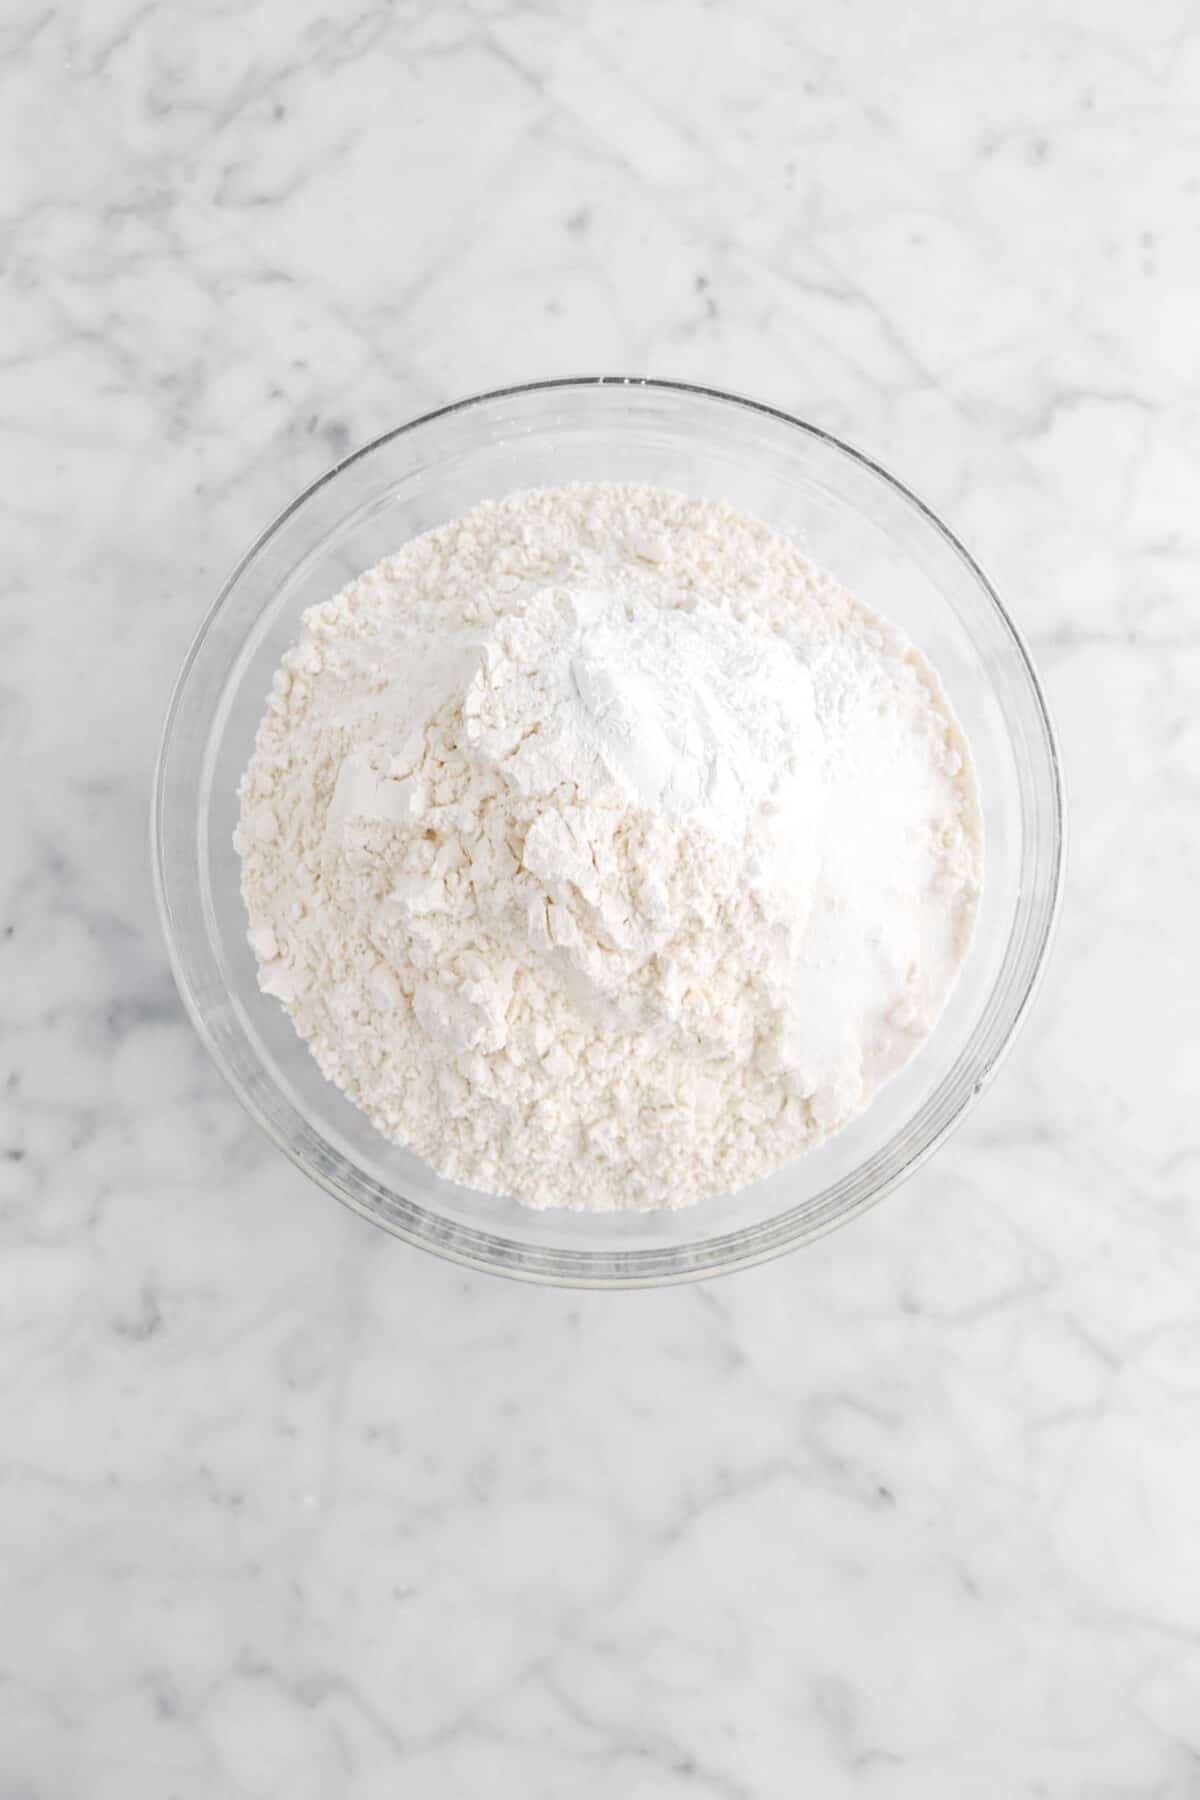 flour, salt, baking powder in glass bowl